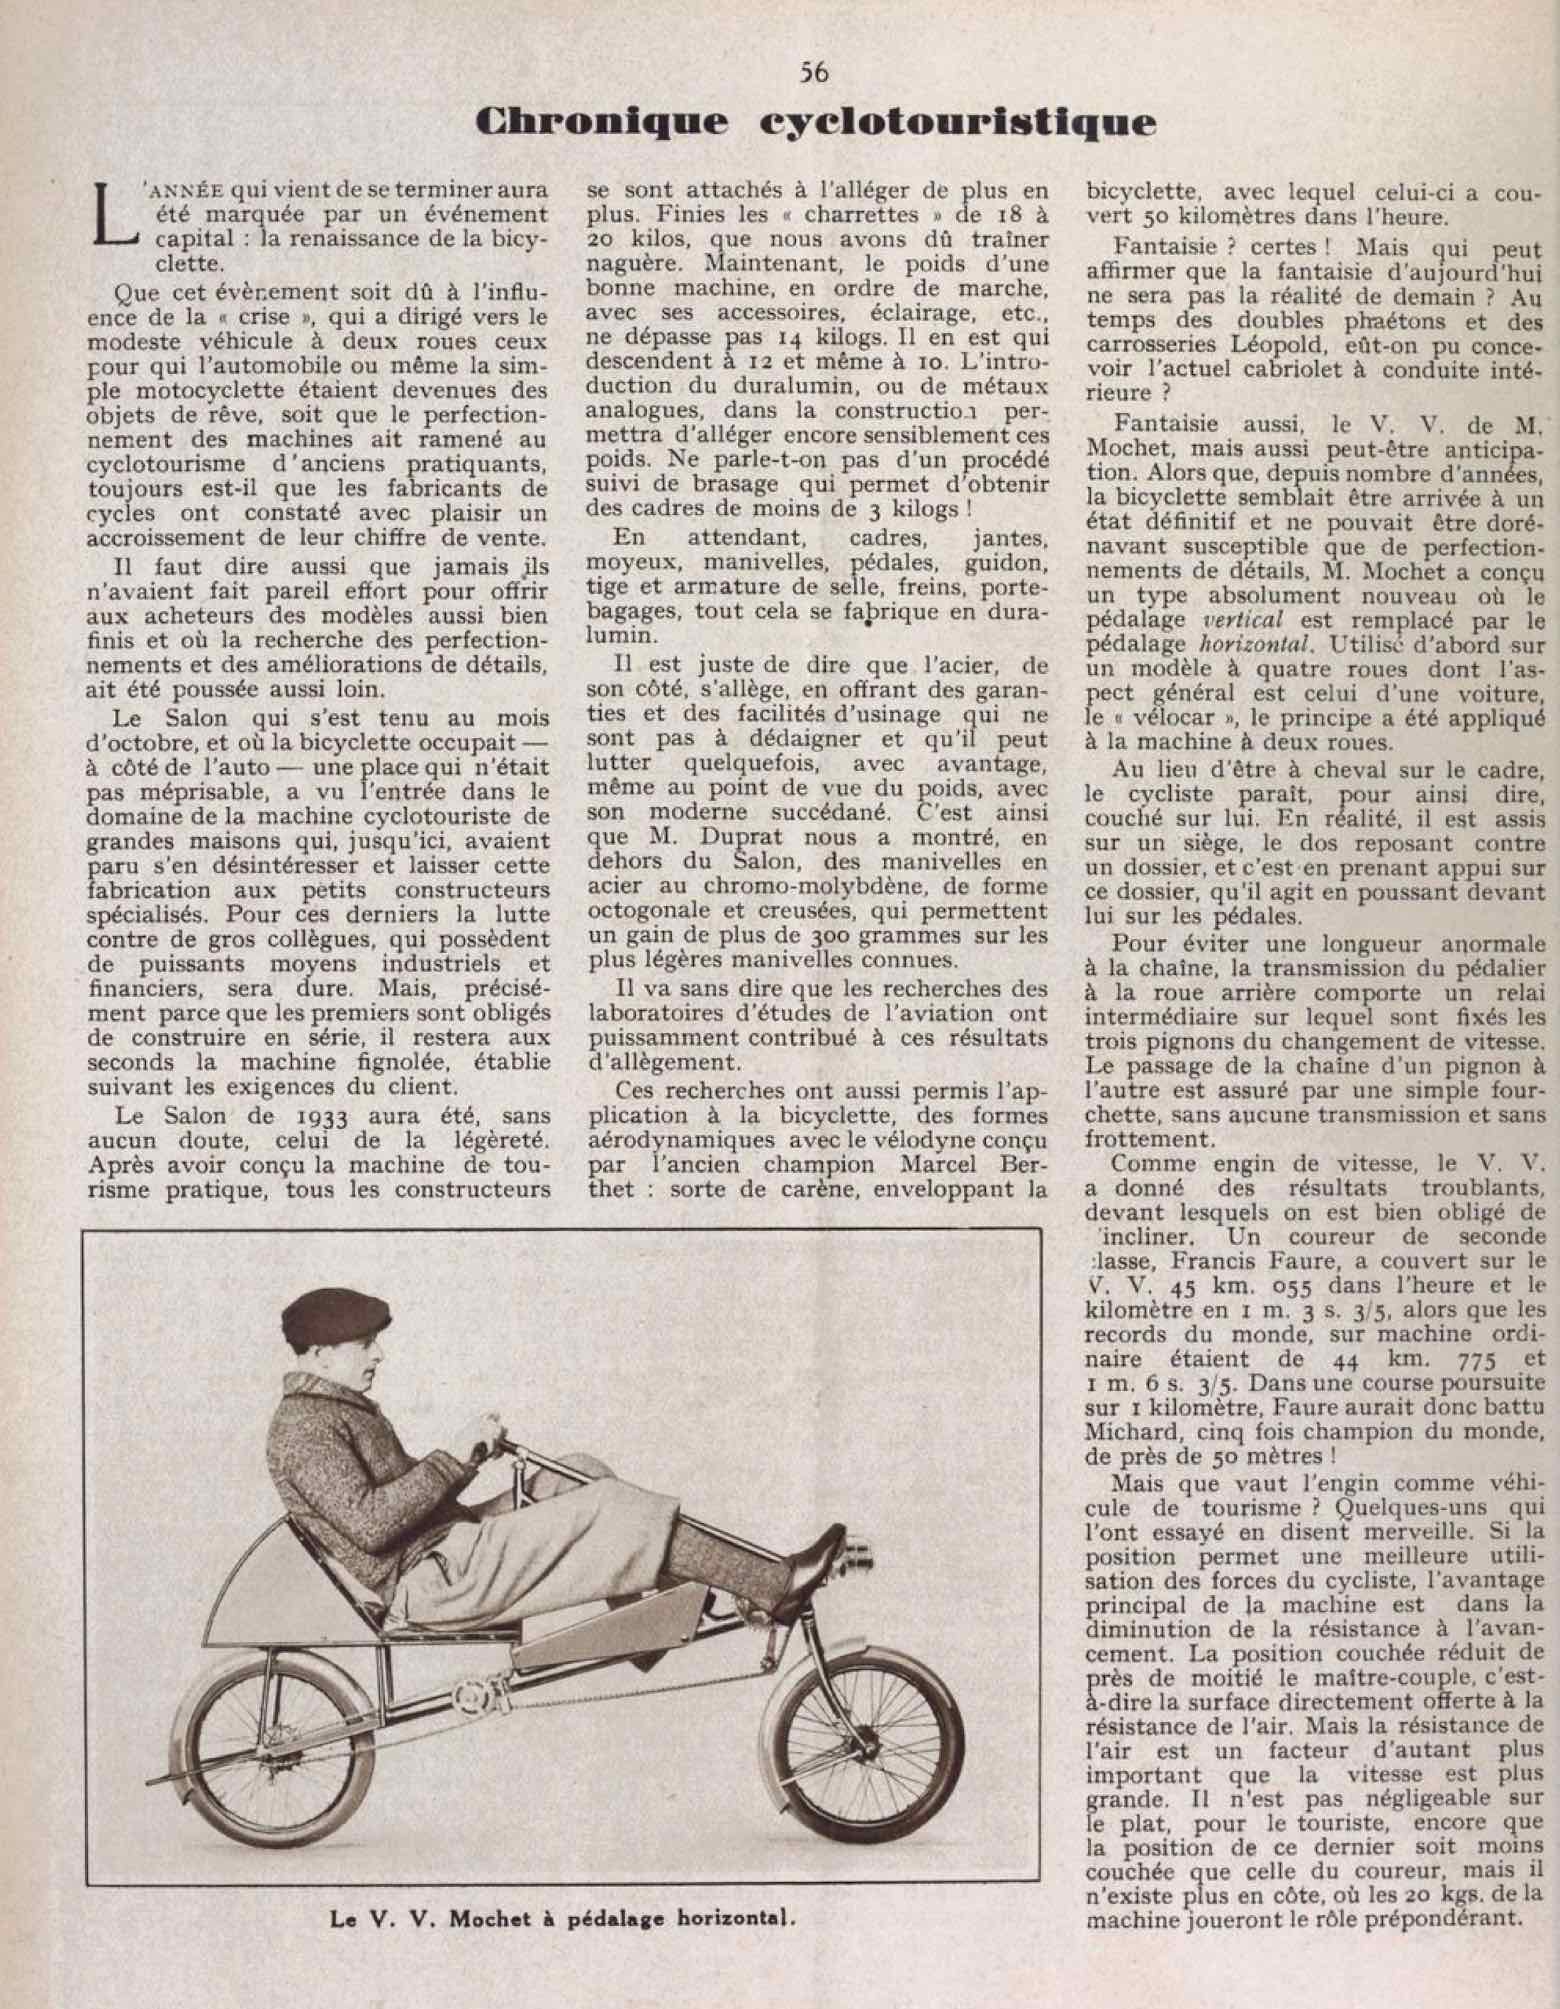 T.C.F. Revue Mensuelle February 1934 - Chronique cyclotouristique scan 1 main image